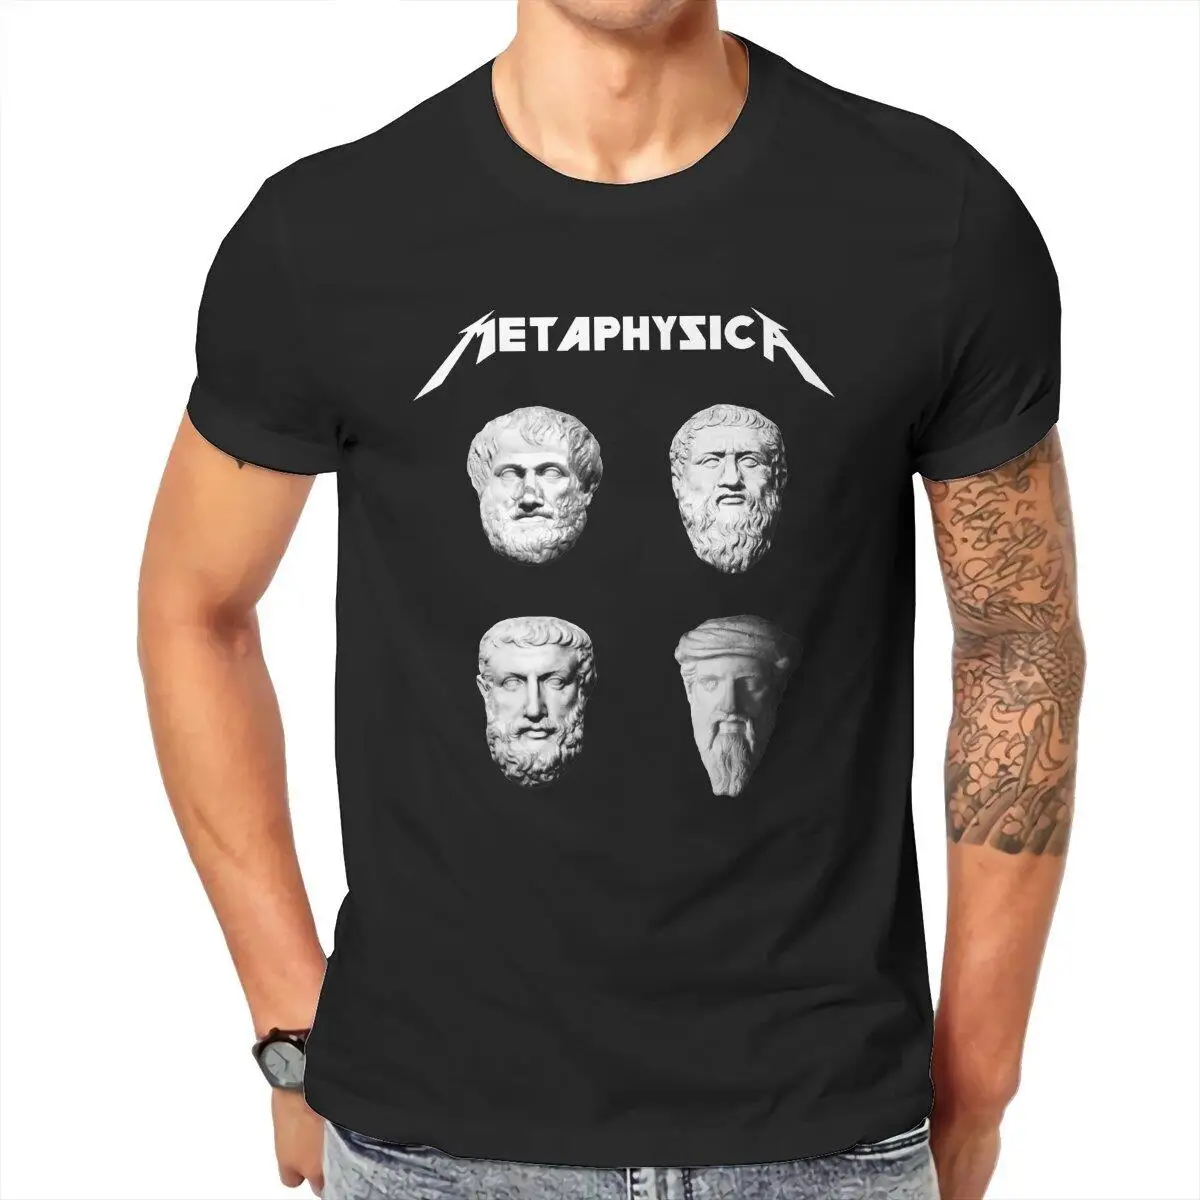 Metaphysica Fun Metal Philosophy Men's T Shirt  Funny Tees Short Sleeve Round Collar T-Shirts Cotton Adult Tops